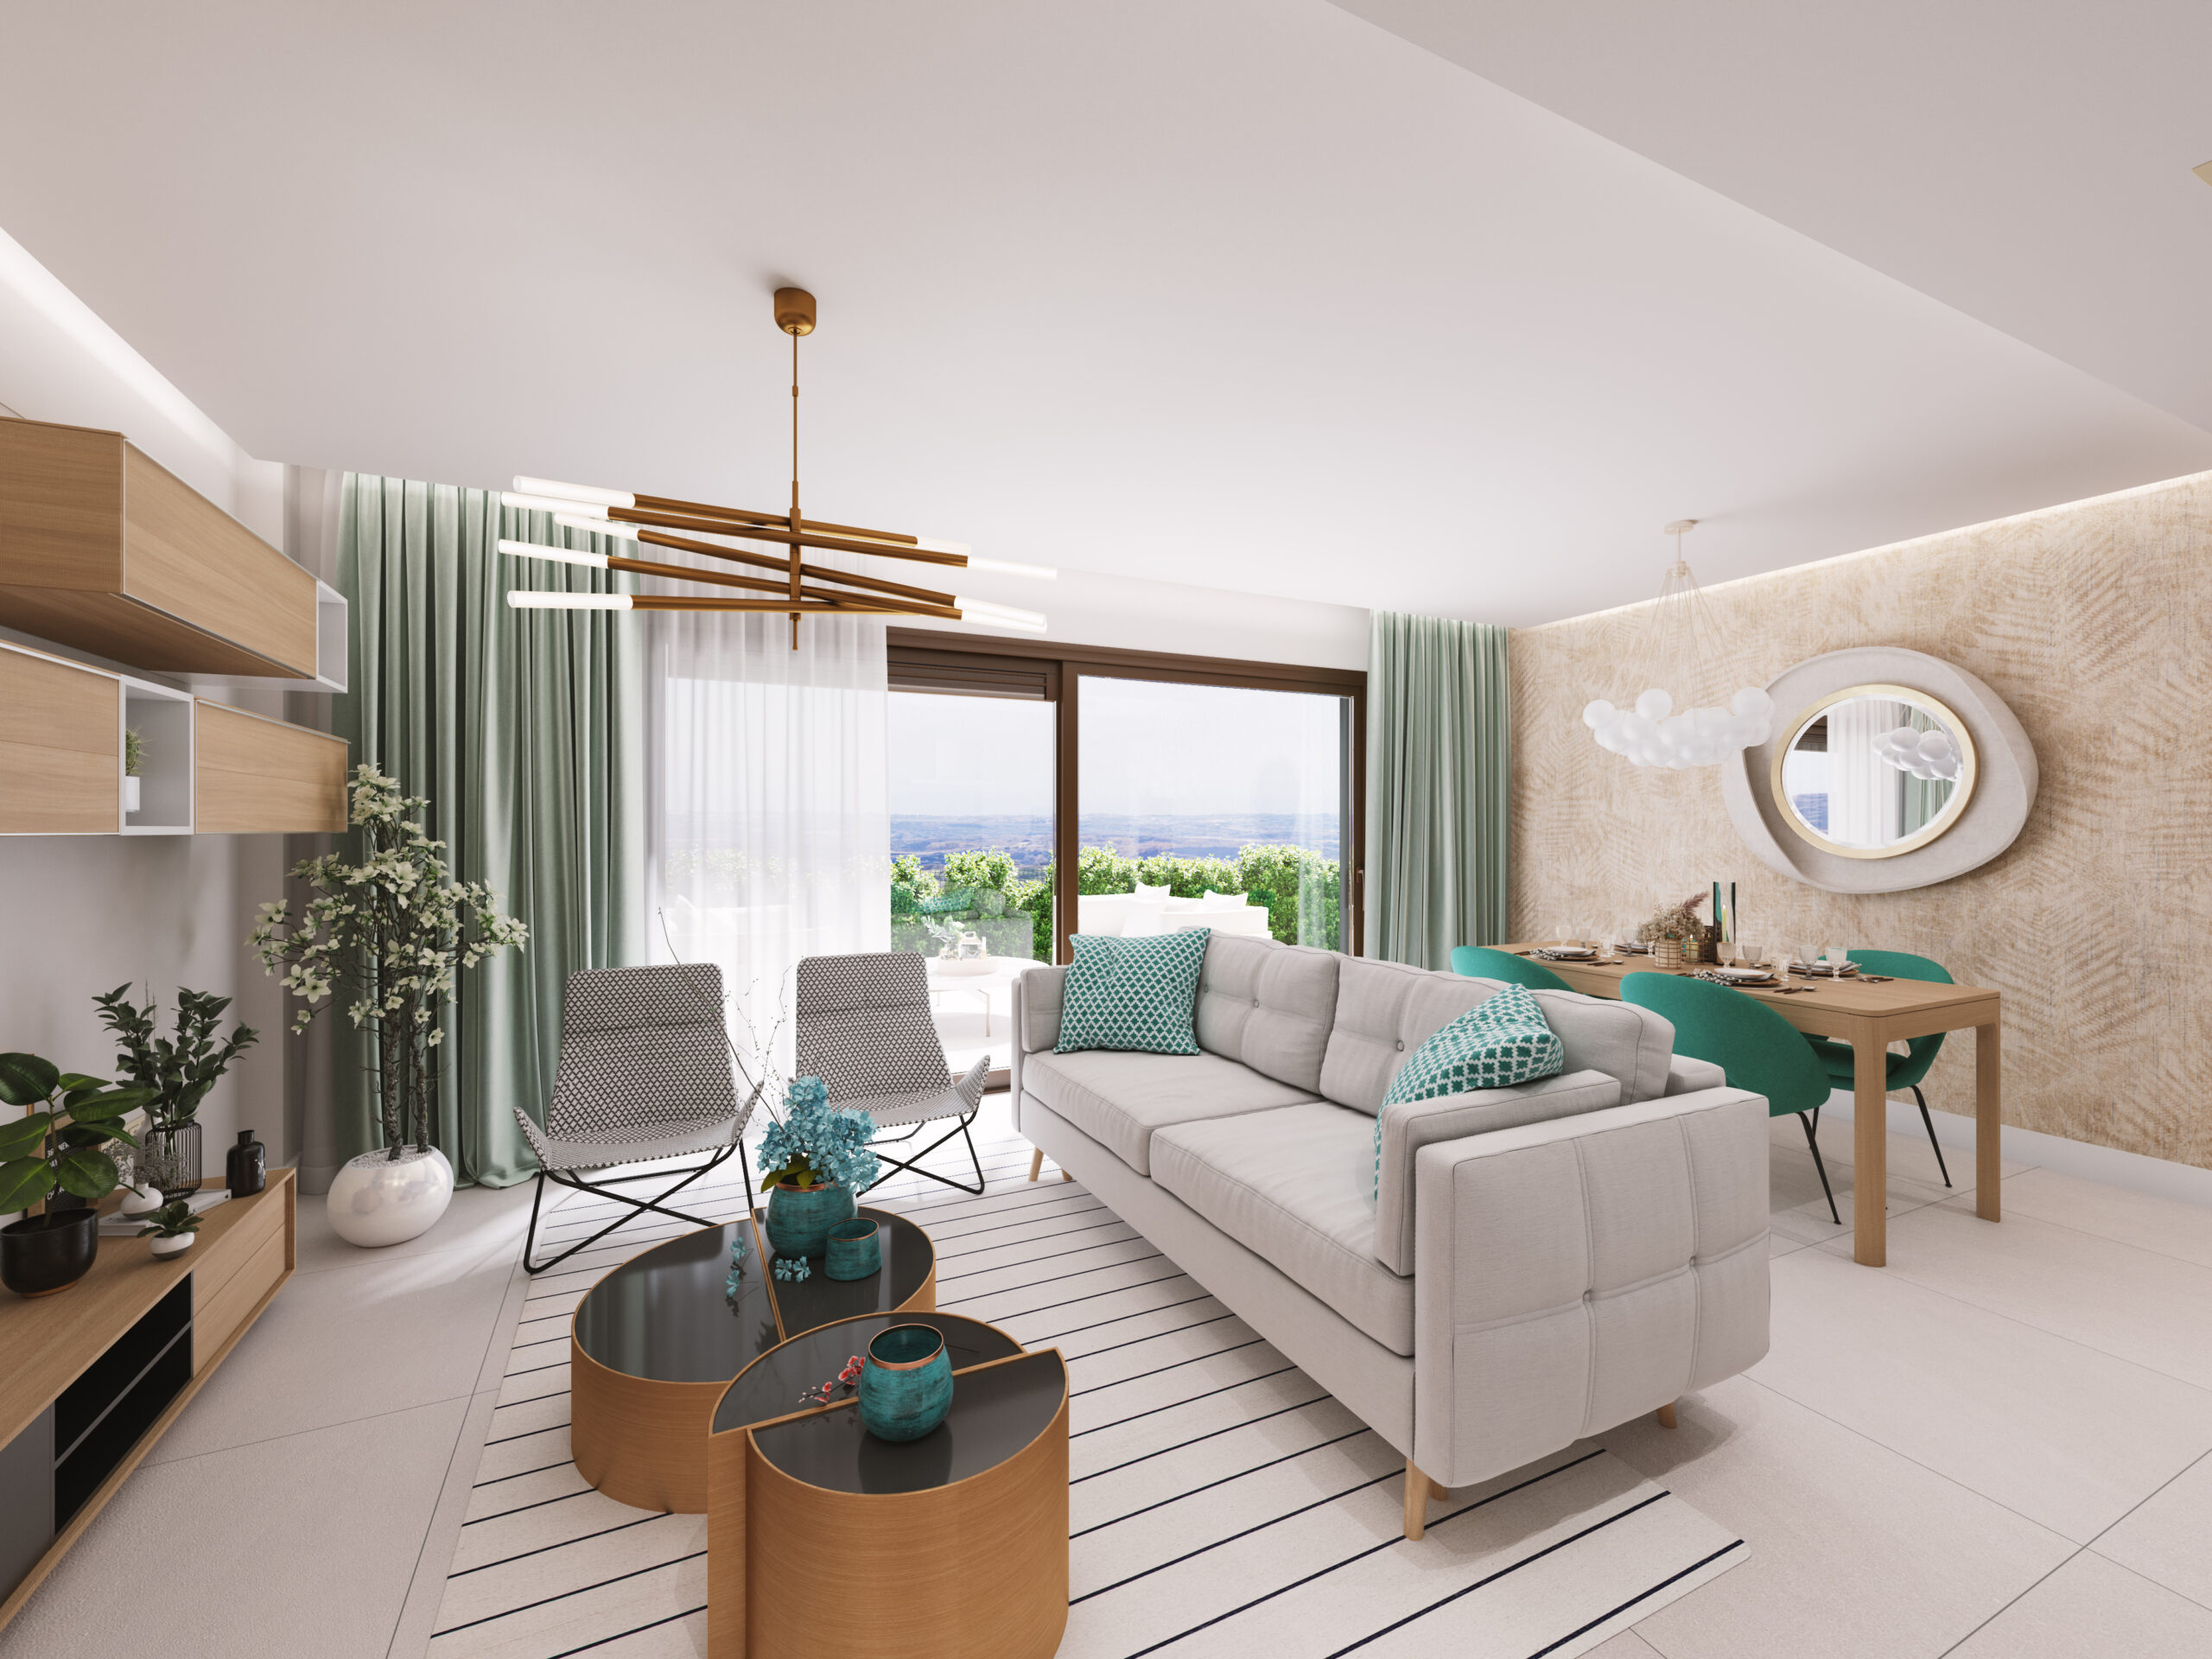 Almazara Hills apartments salon